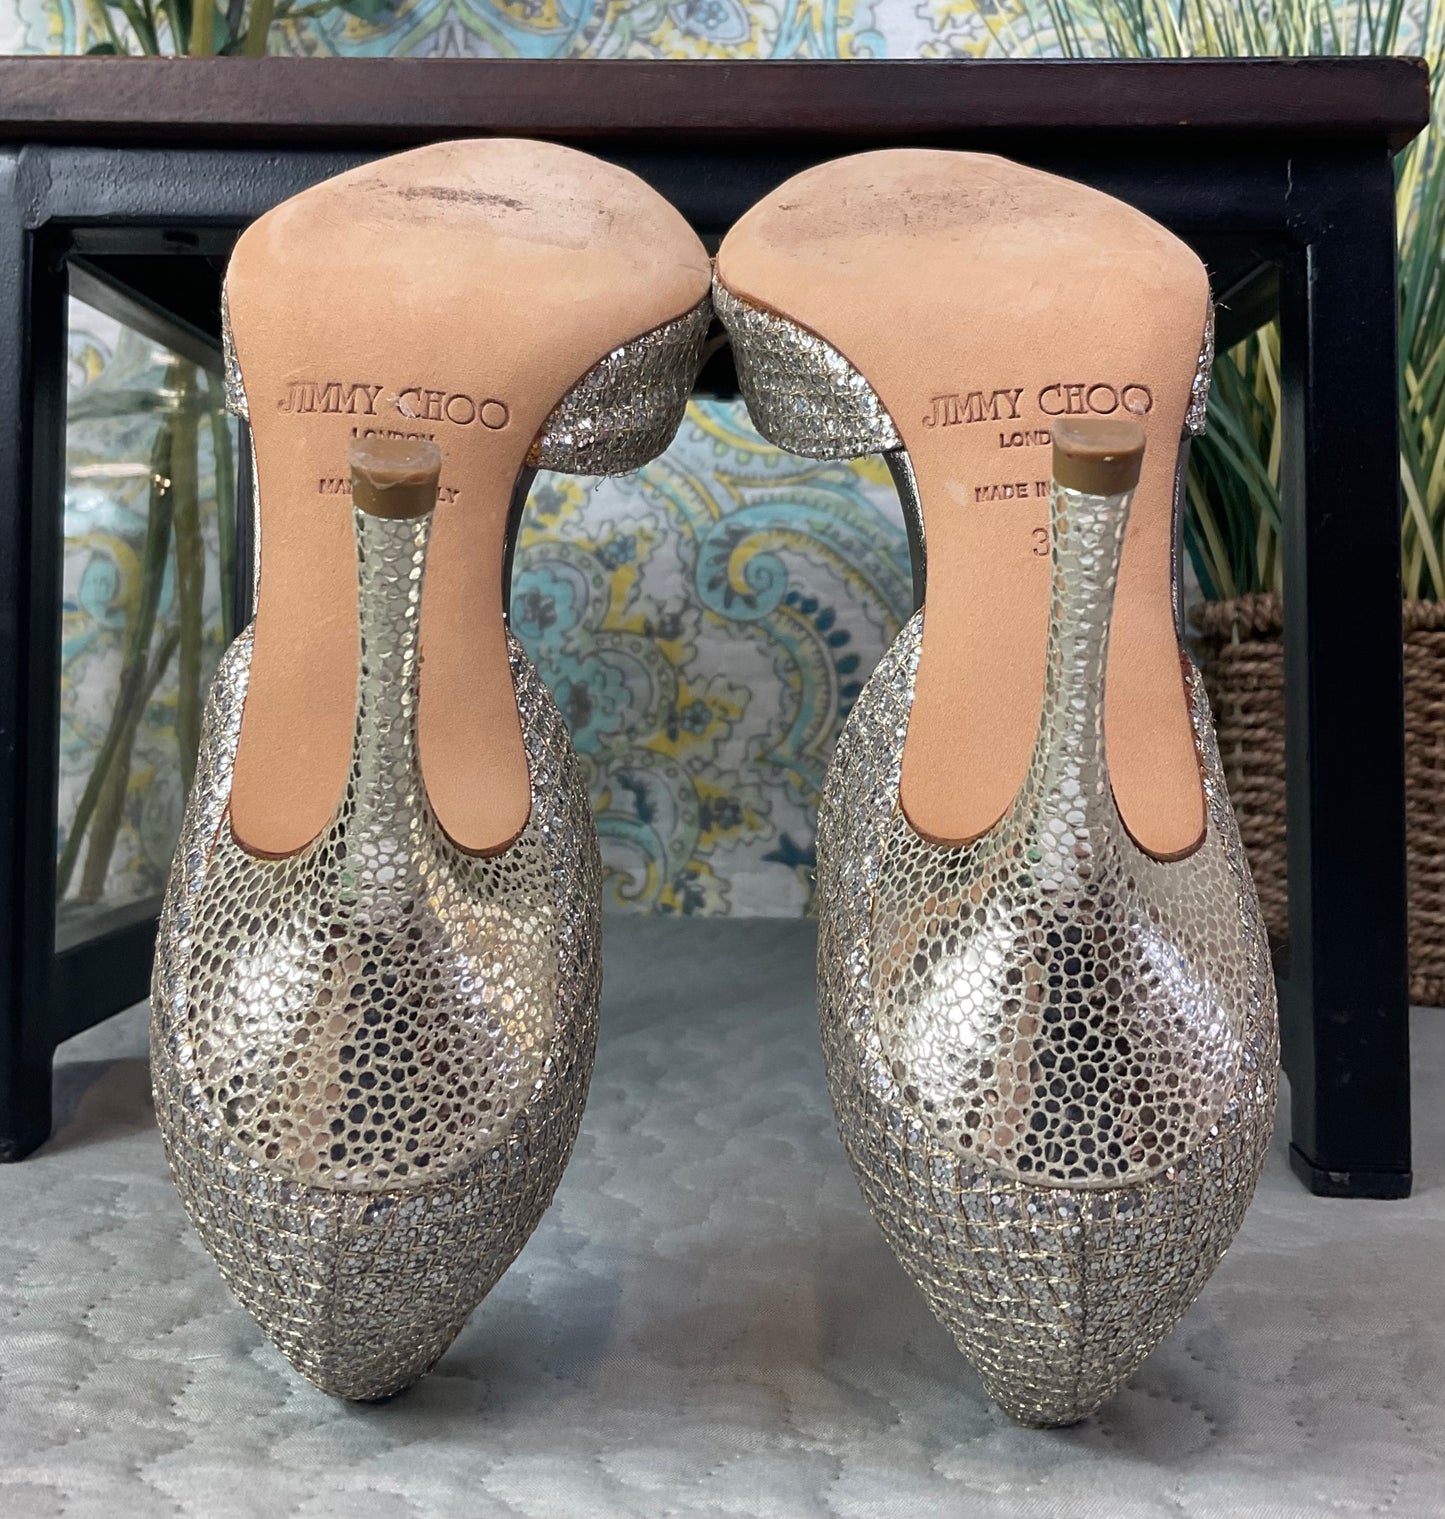 Jimmy Choo London Peep Toe Glittery Gold Heels, Euro Size 35